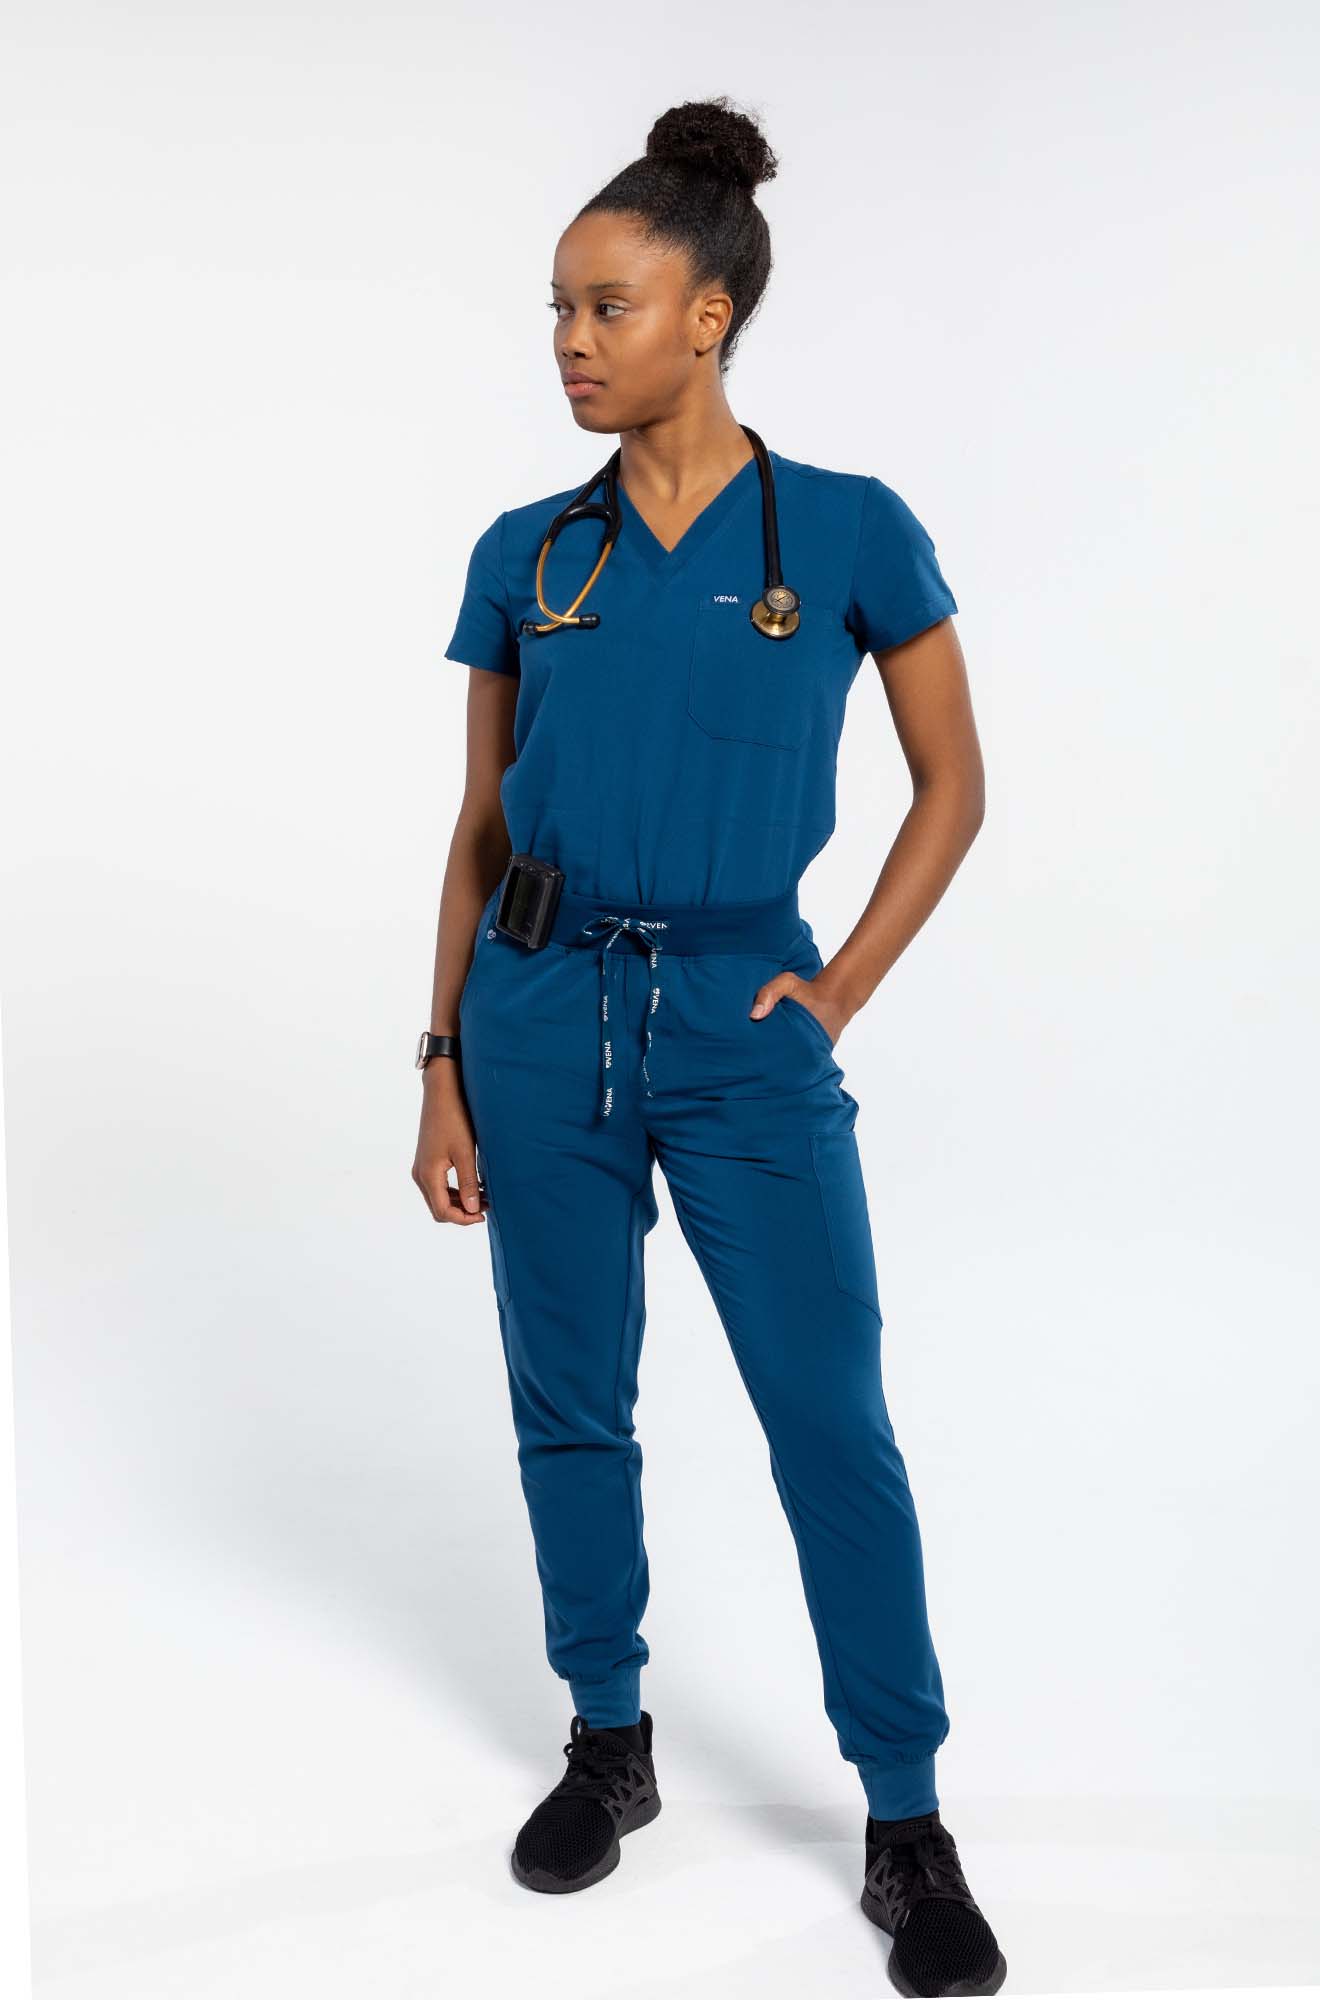 Vena scrub pant in navy blue featuring full set of scrub#colour_navy-blue